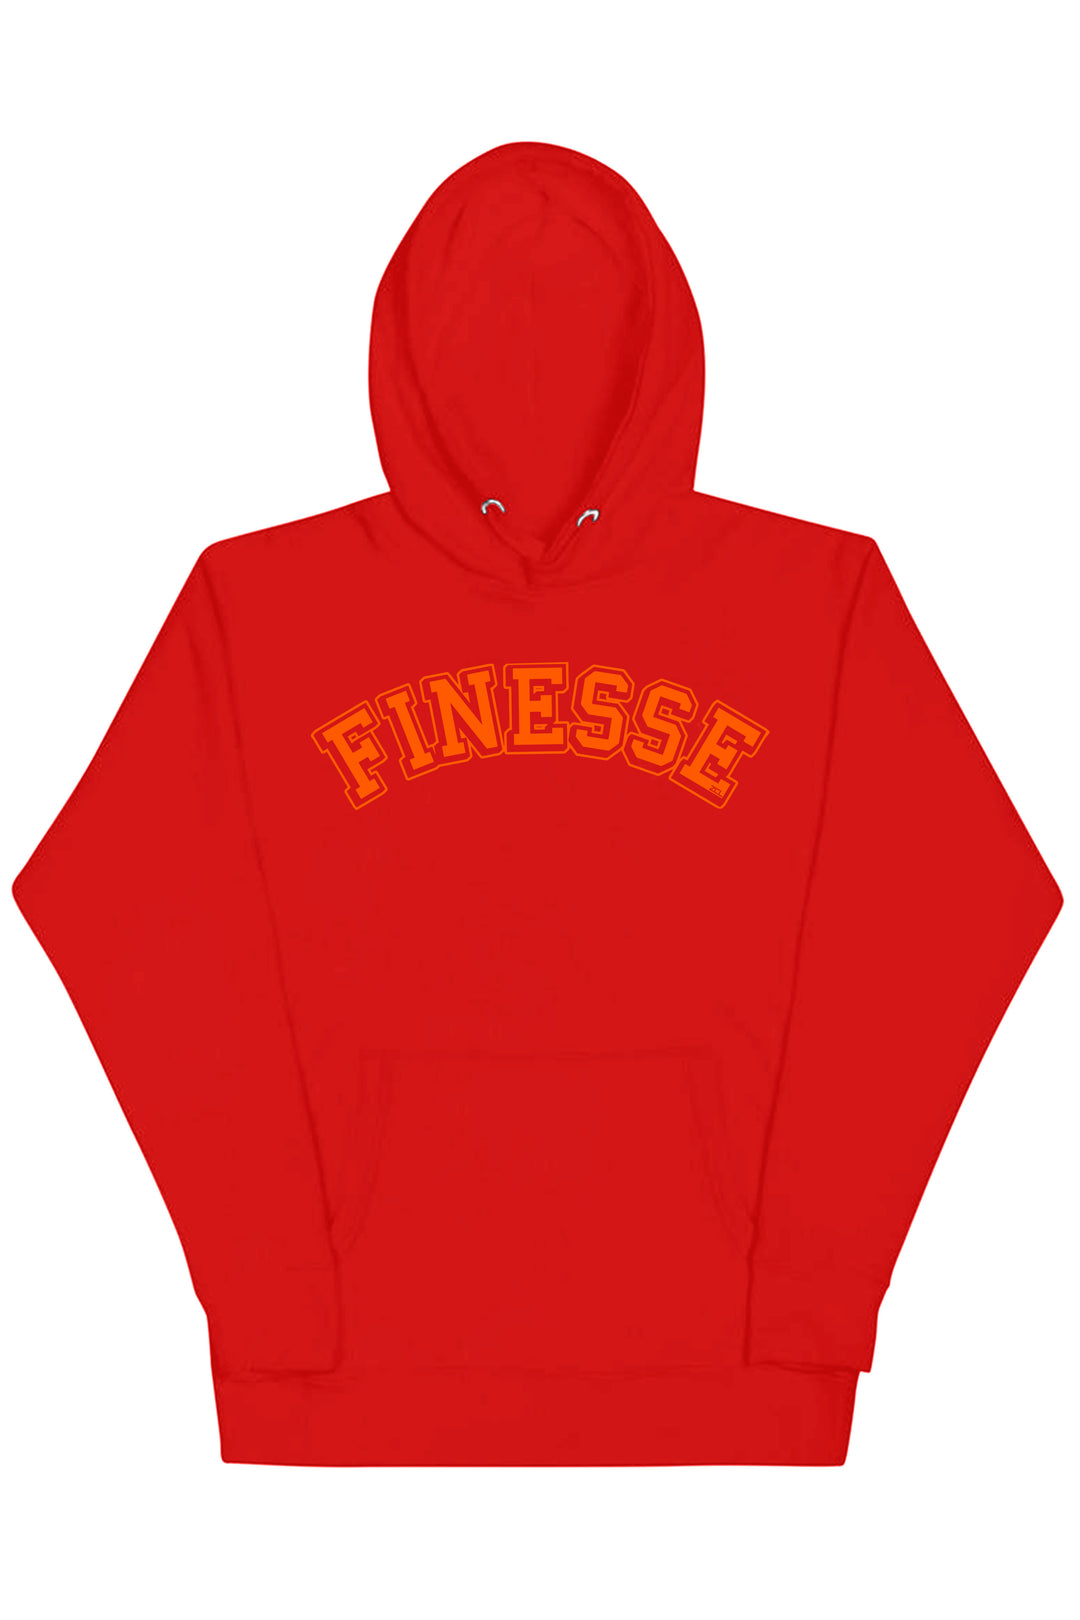 Finesse Hoodie (Orange Logo) - Zamage